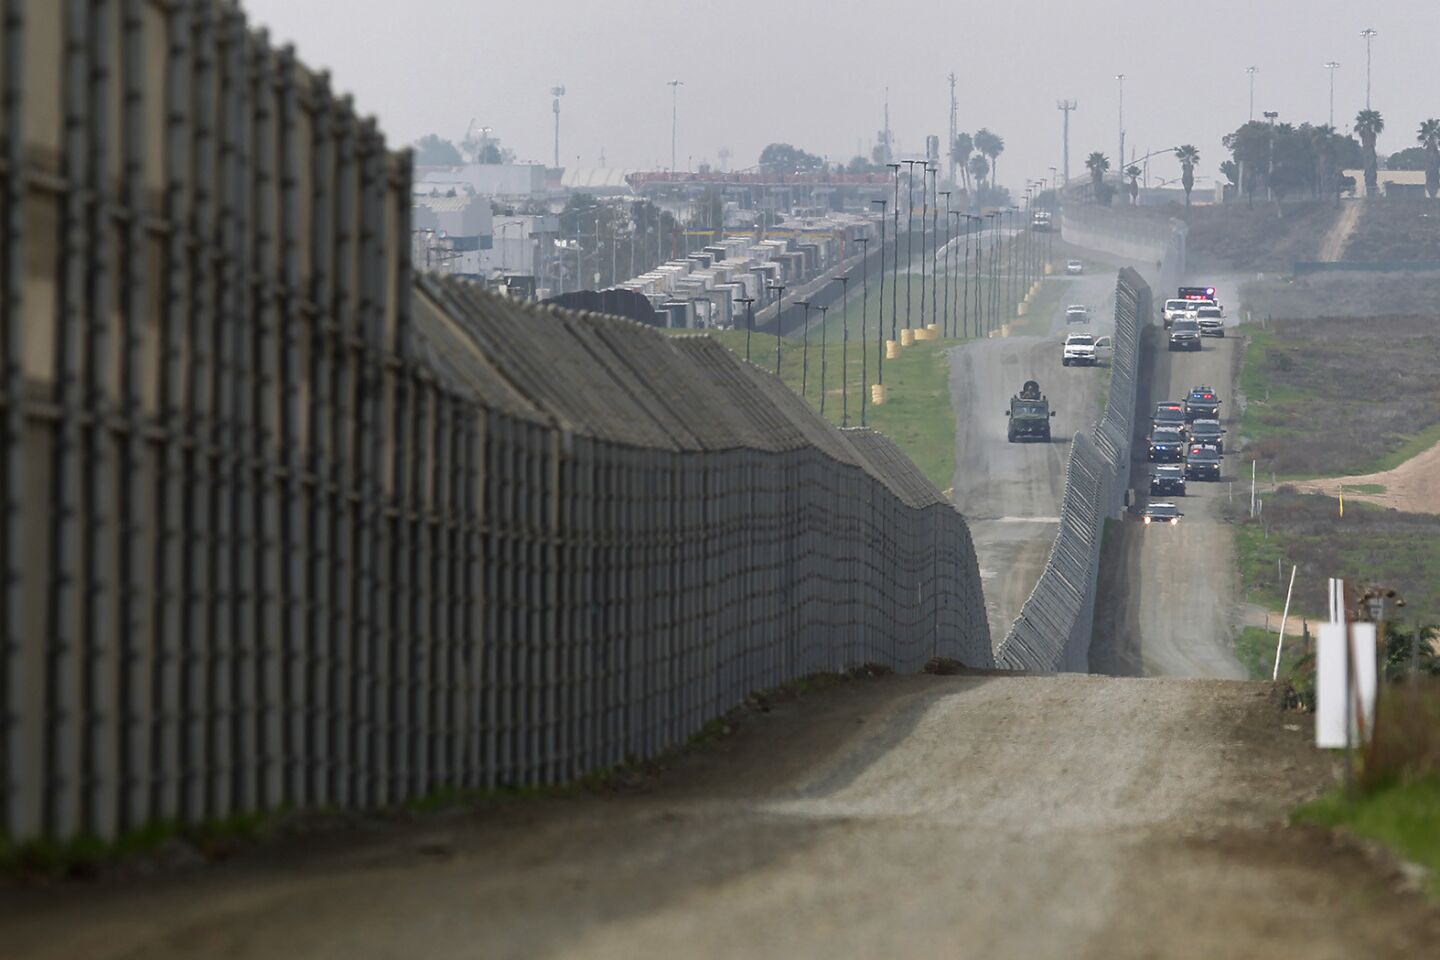 Trump visits border wall prototypes